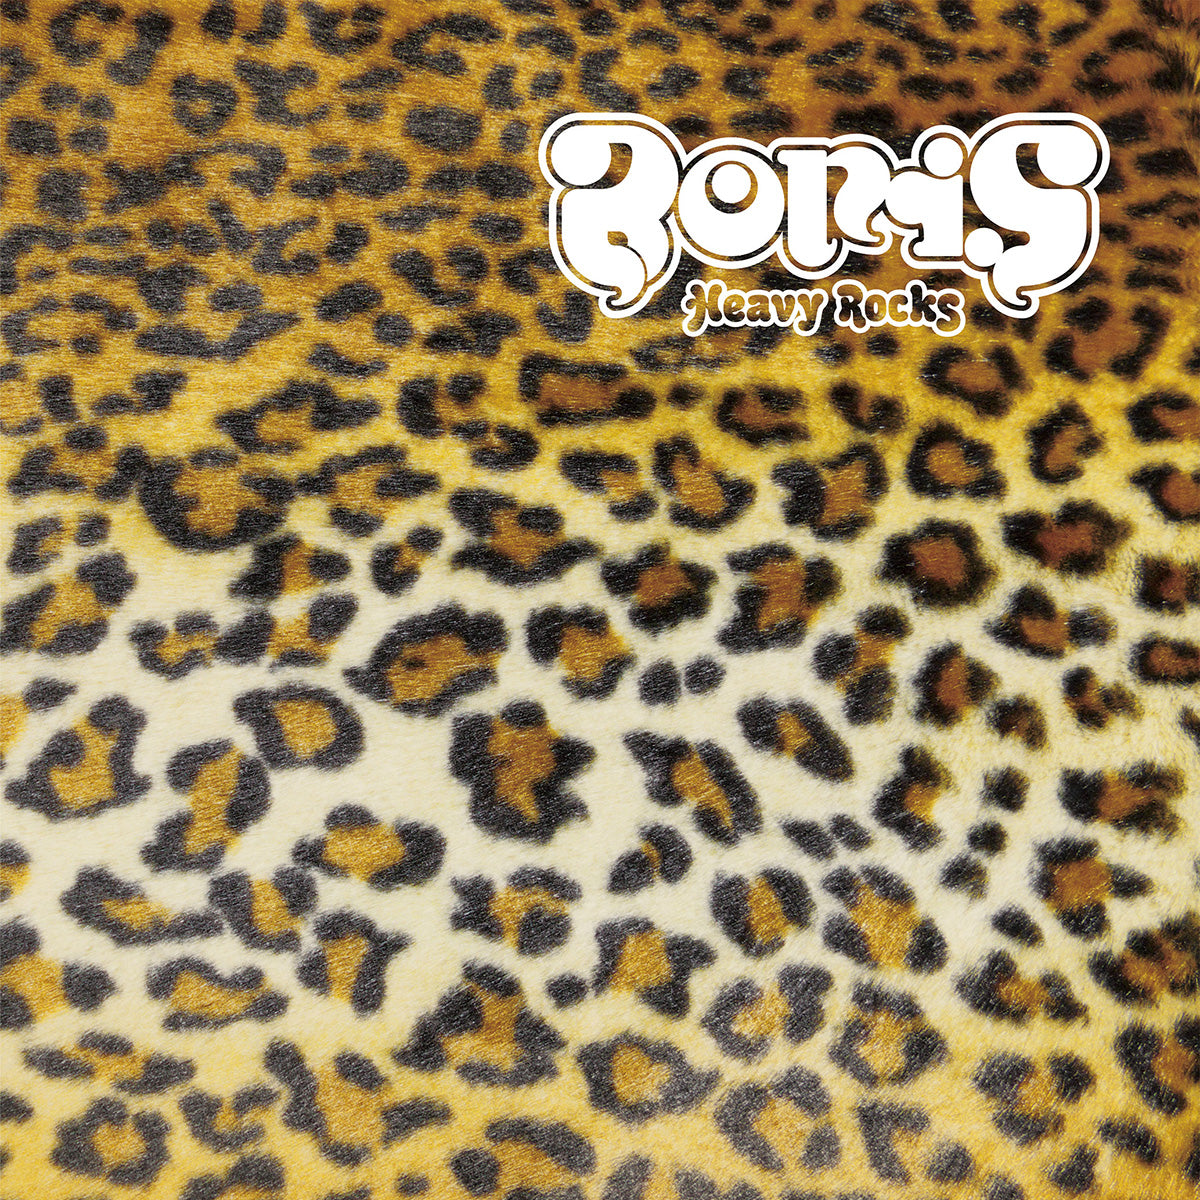 Boris / Heavy Rocks (CD)